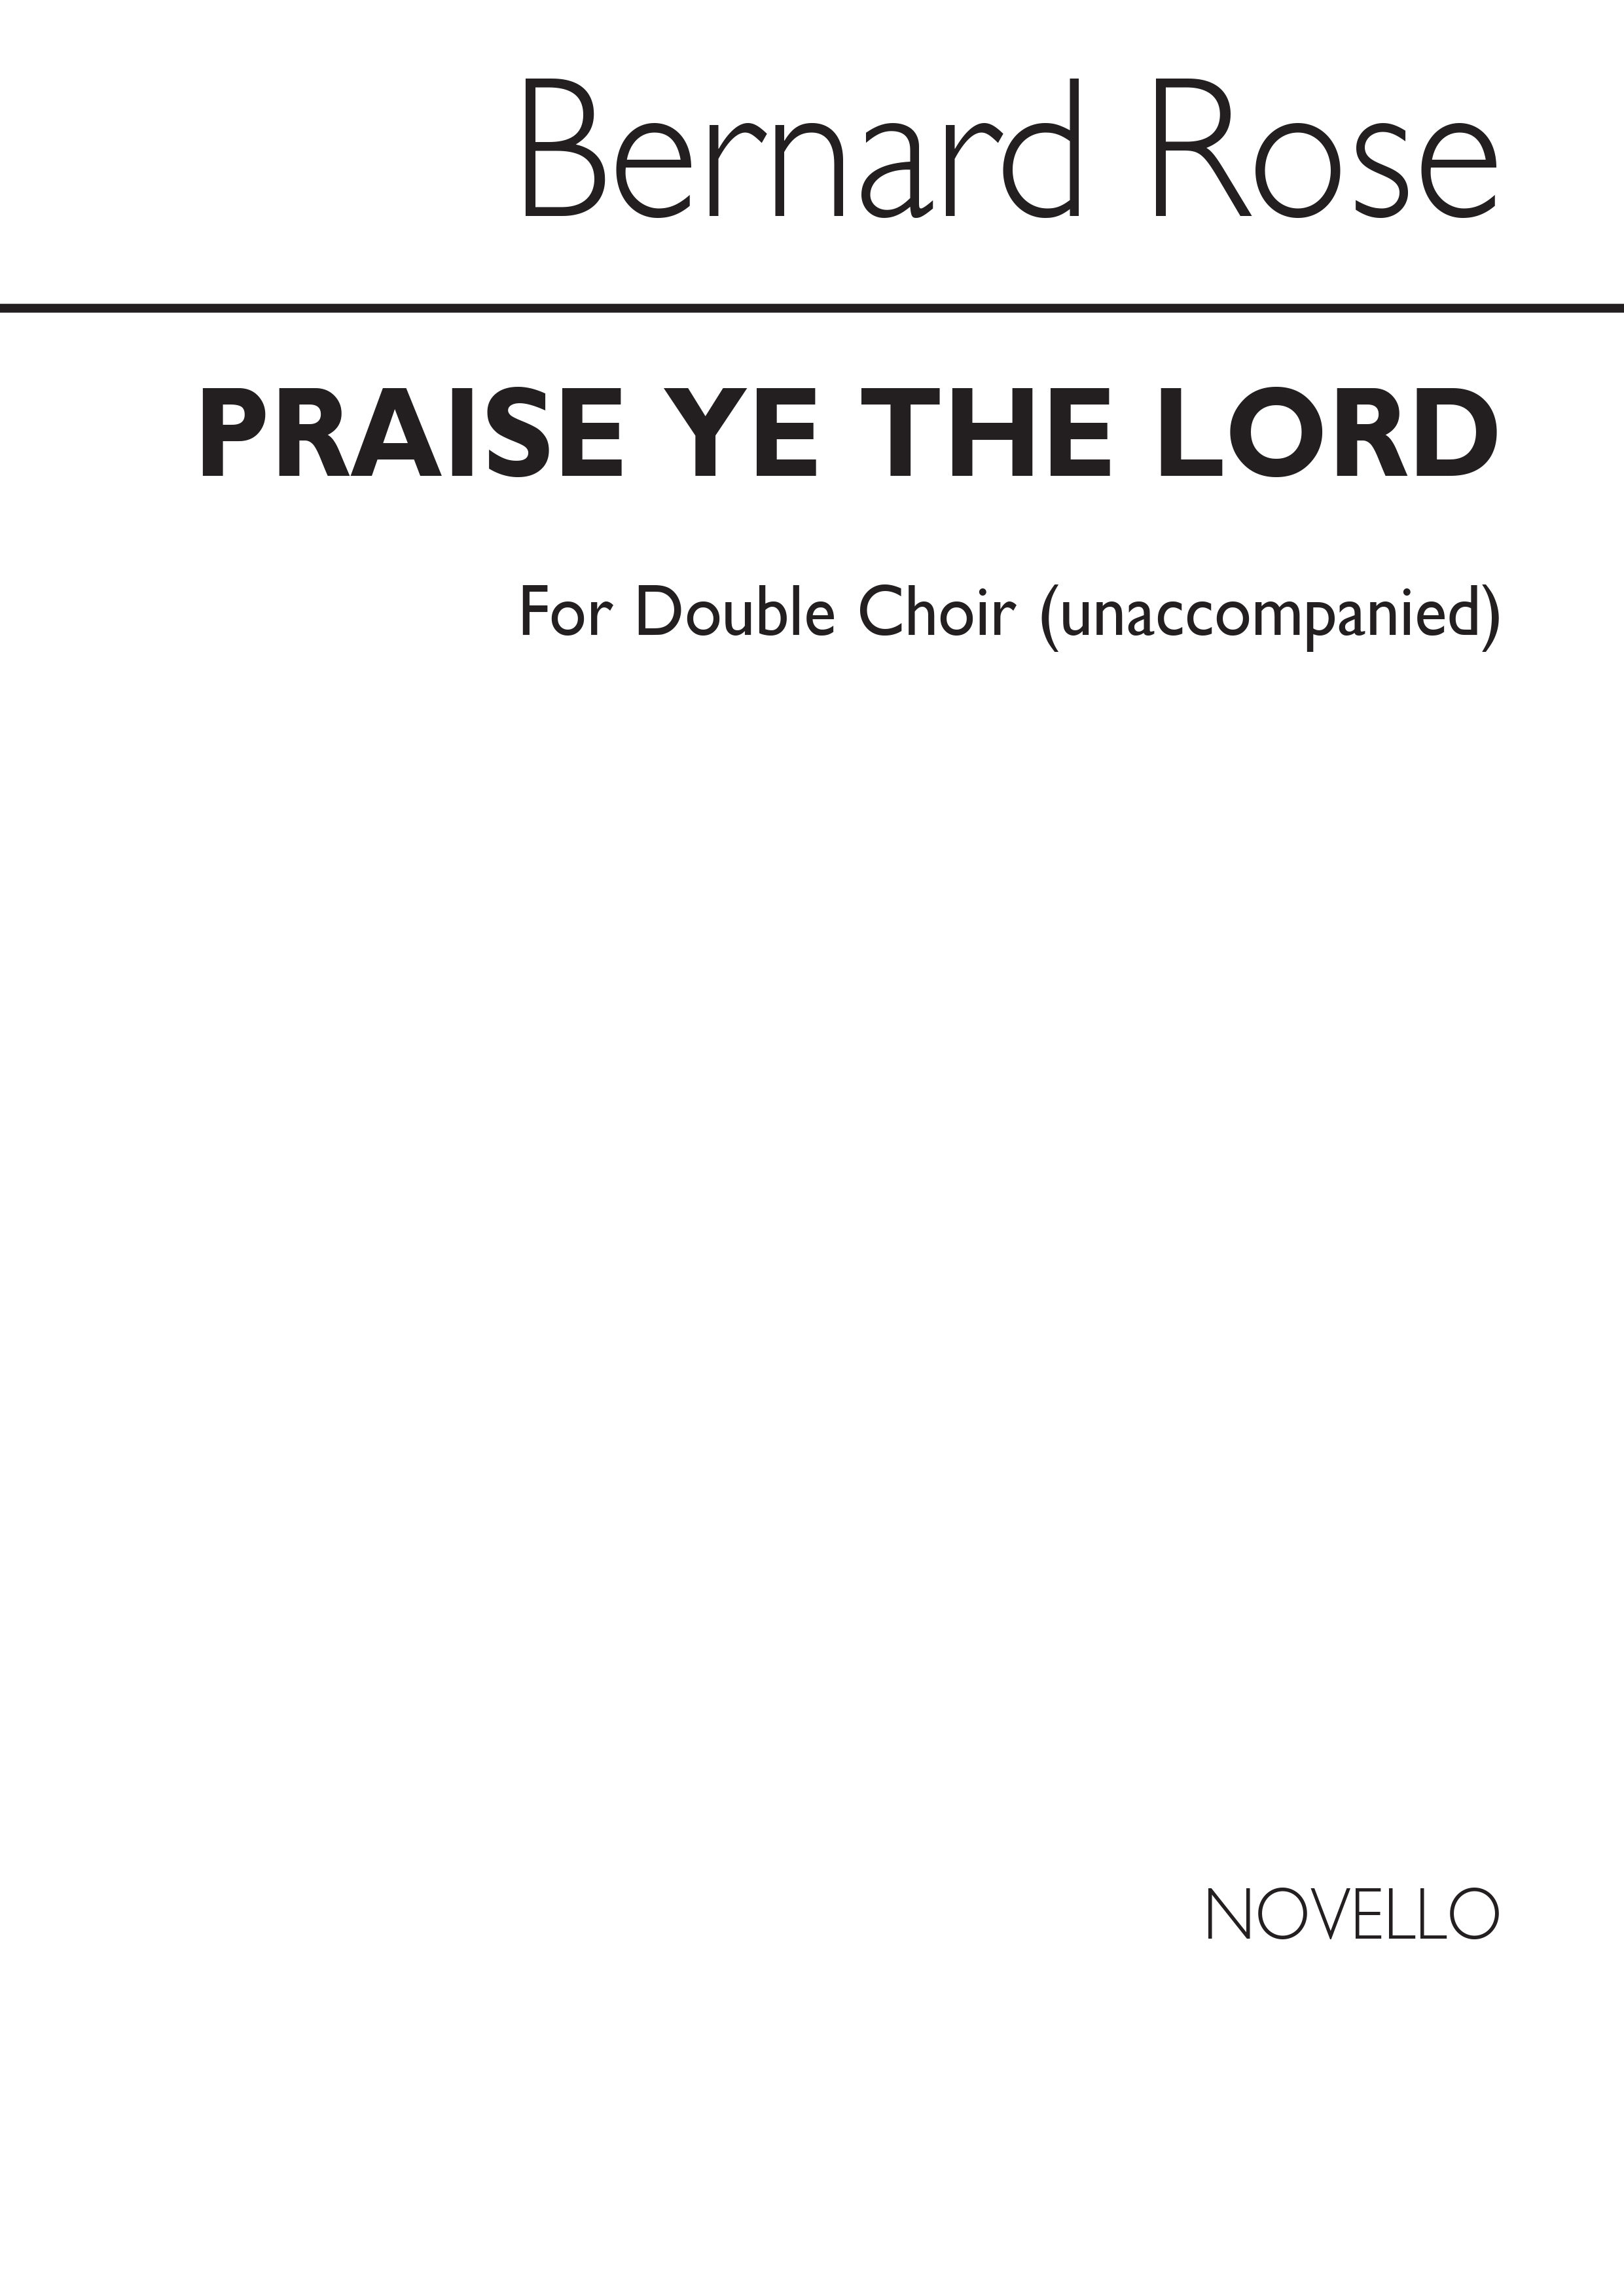 Bernard Rose: Praise Ye The Lord for Unacc. Double Choir